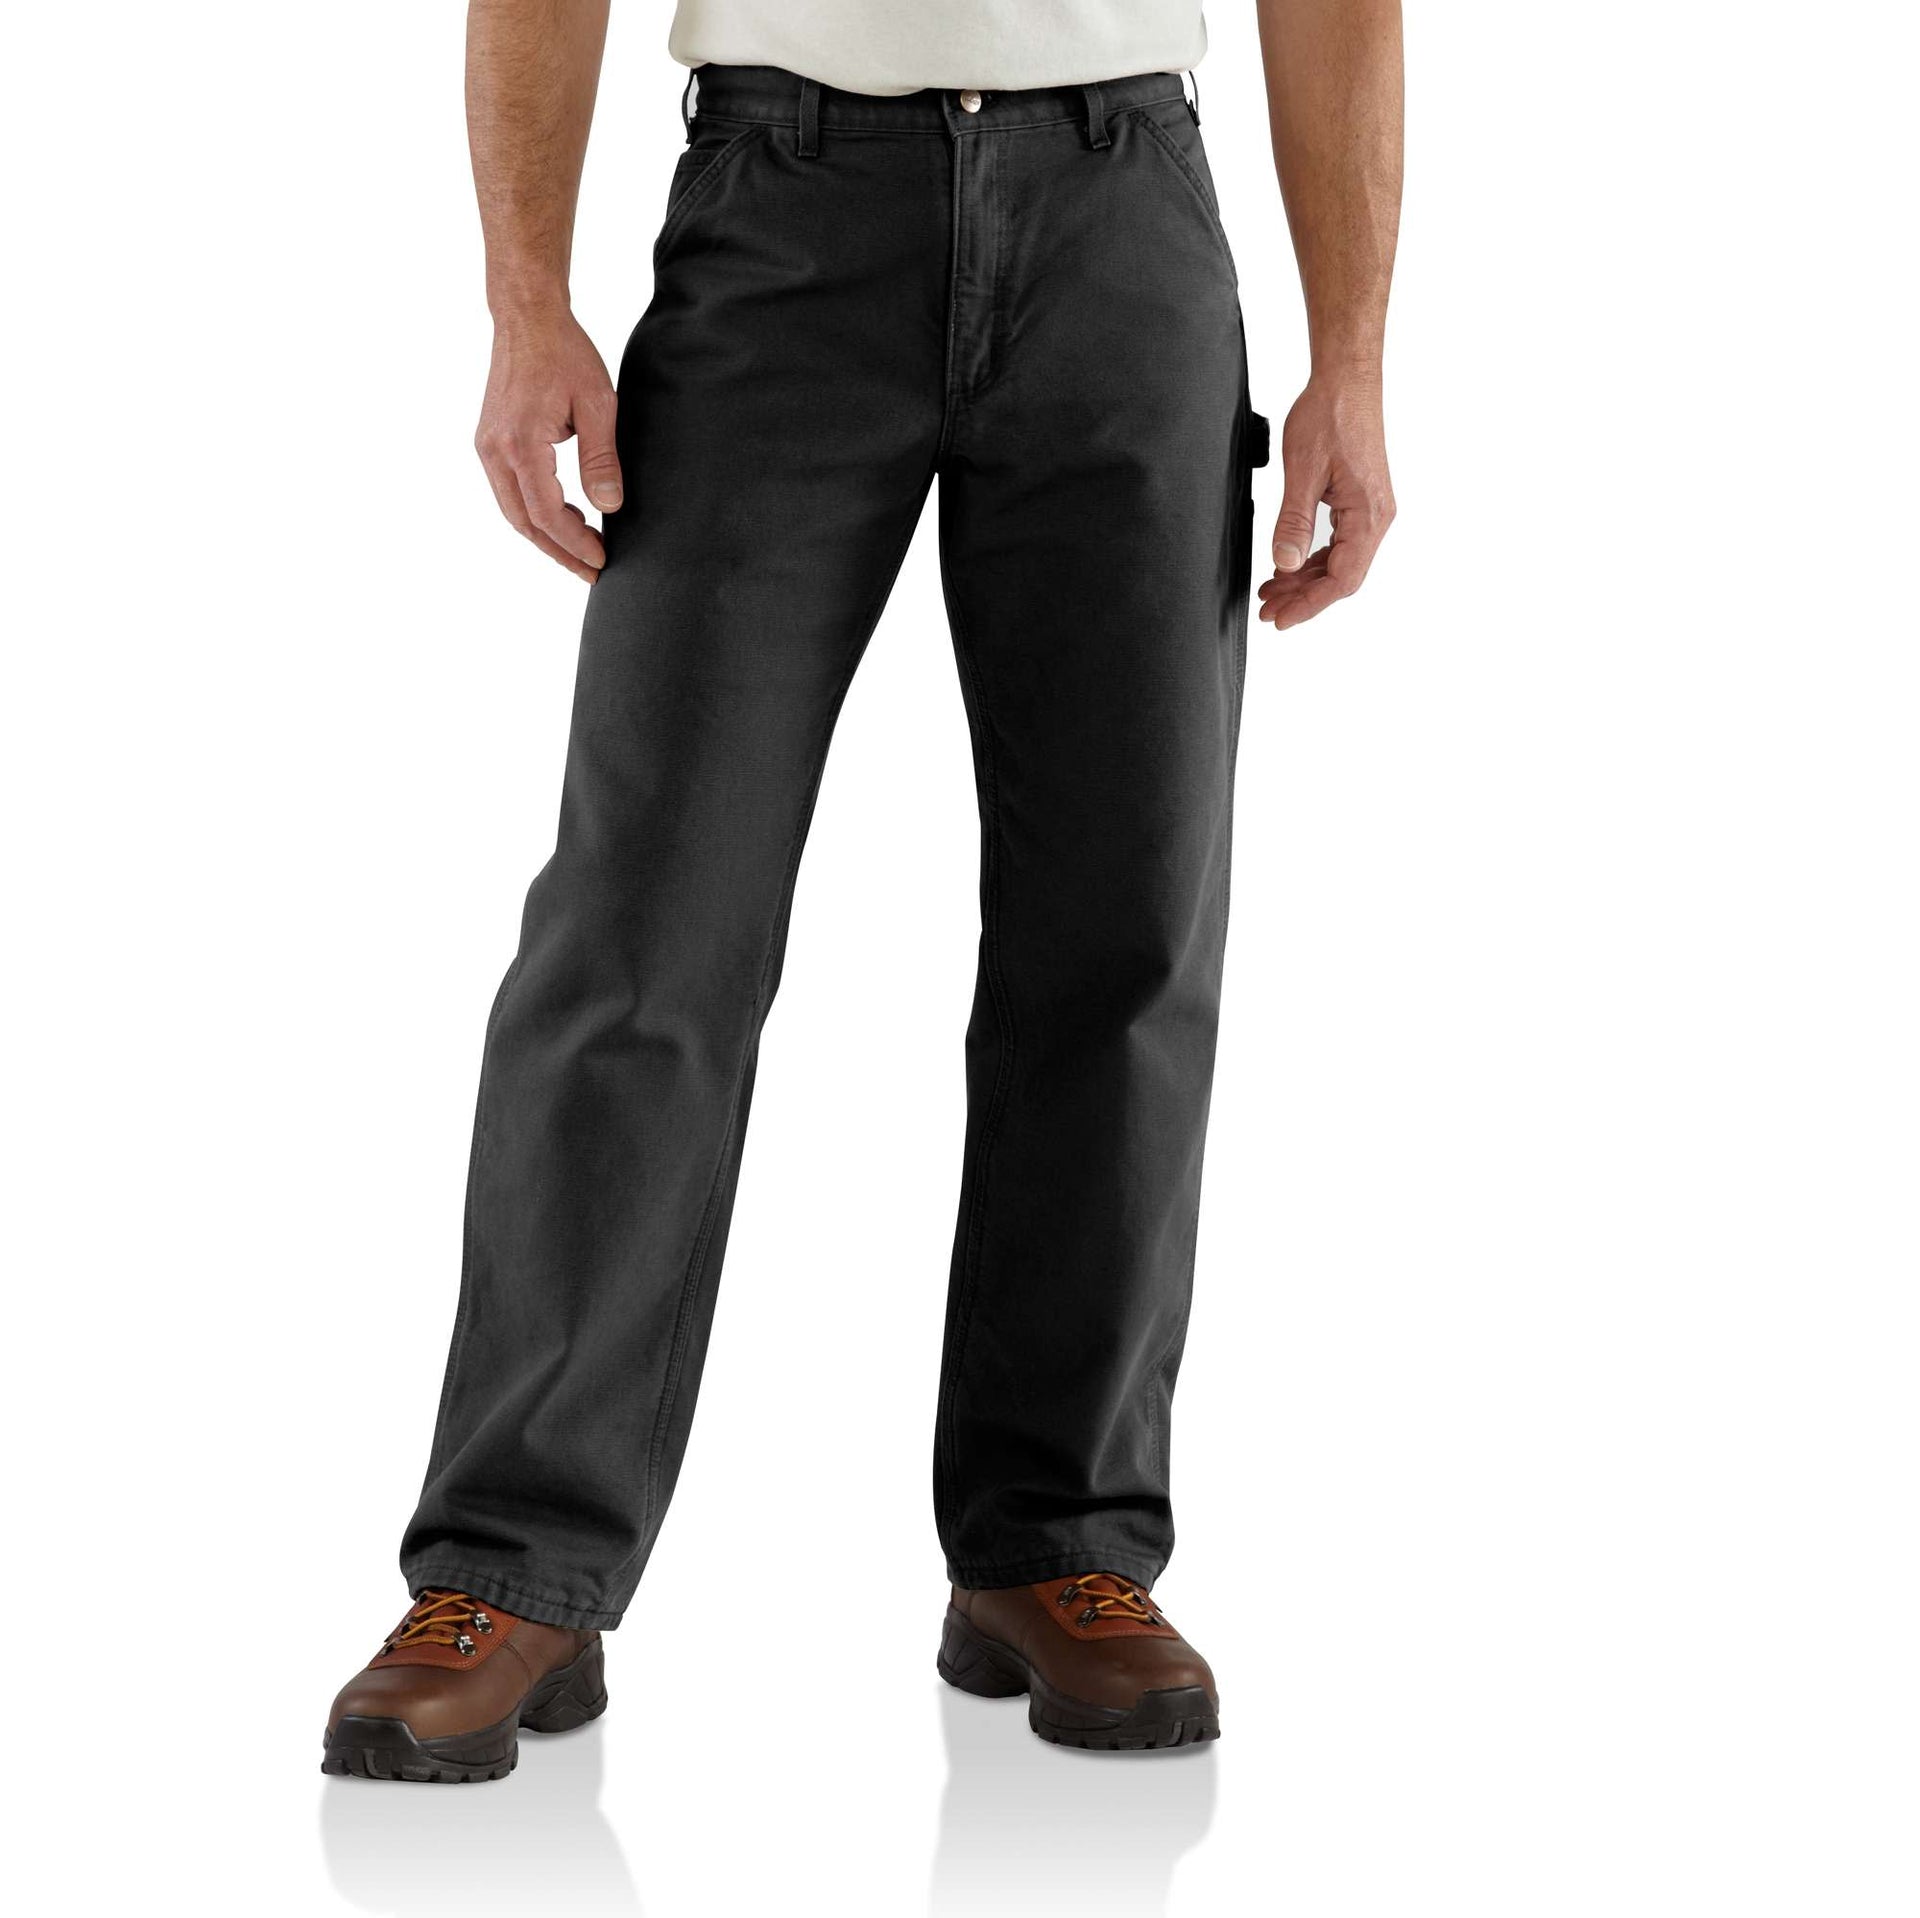 IMPACT Work Pants - Thermal Lined Grey\Black – Phillips Menswear